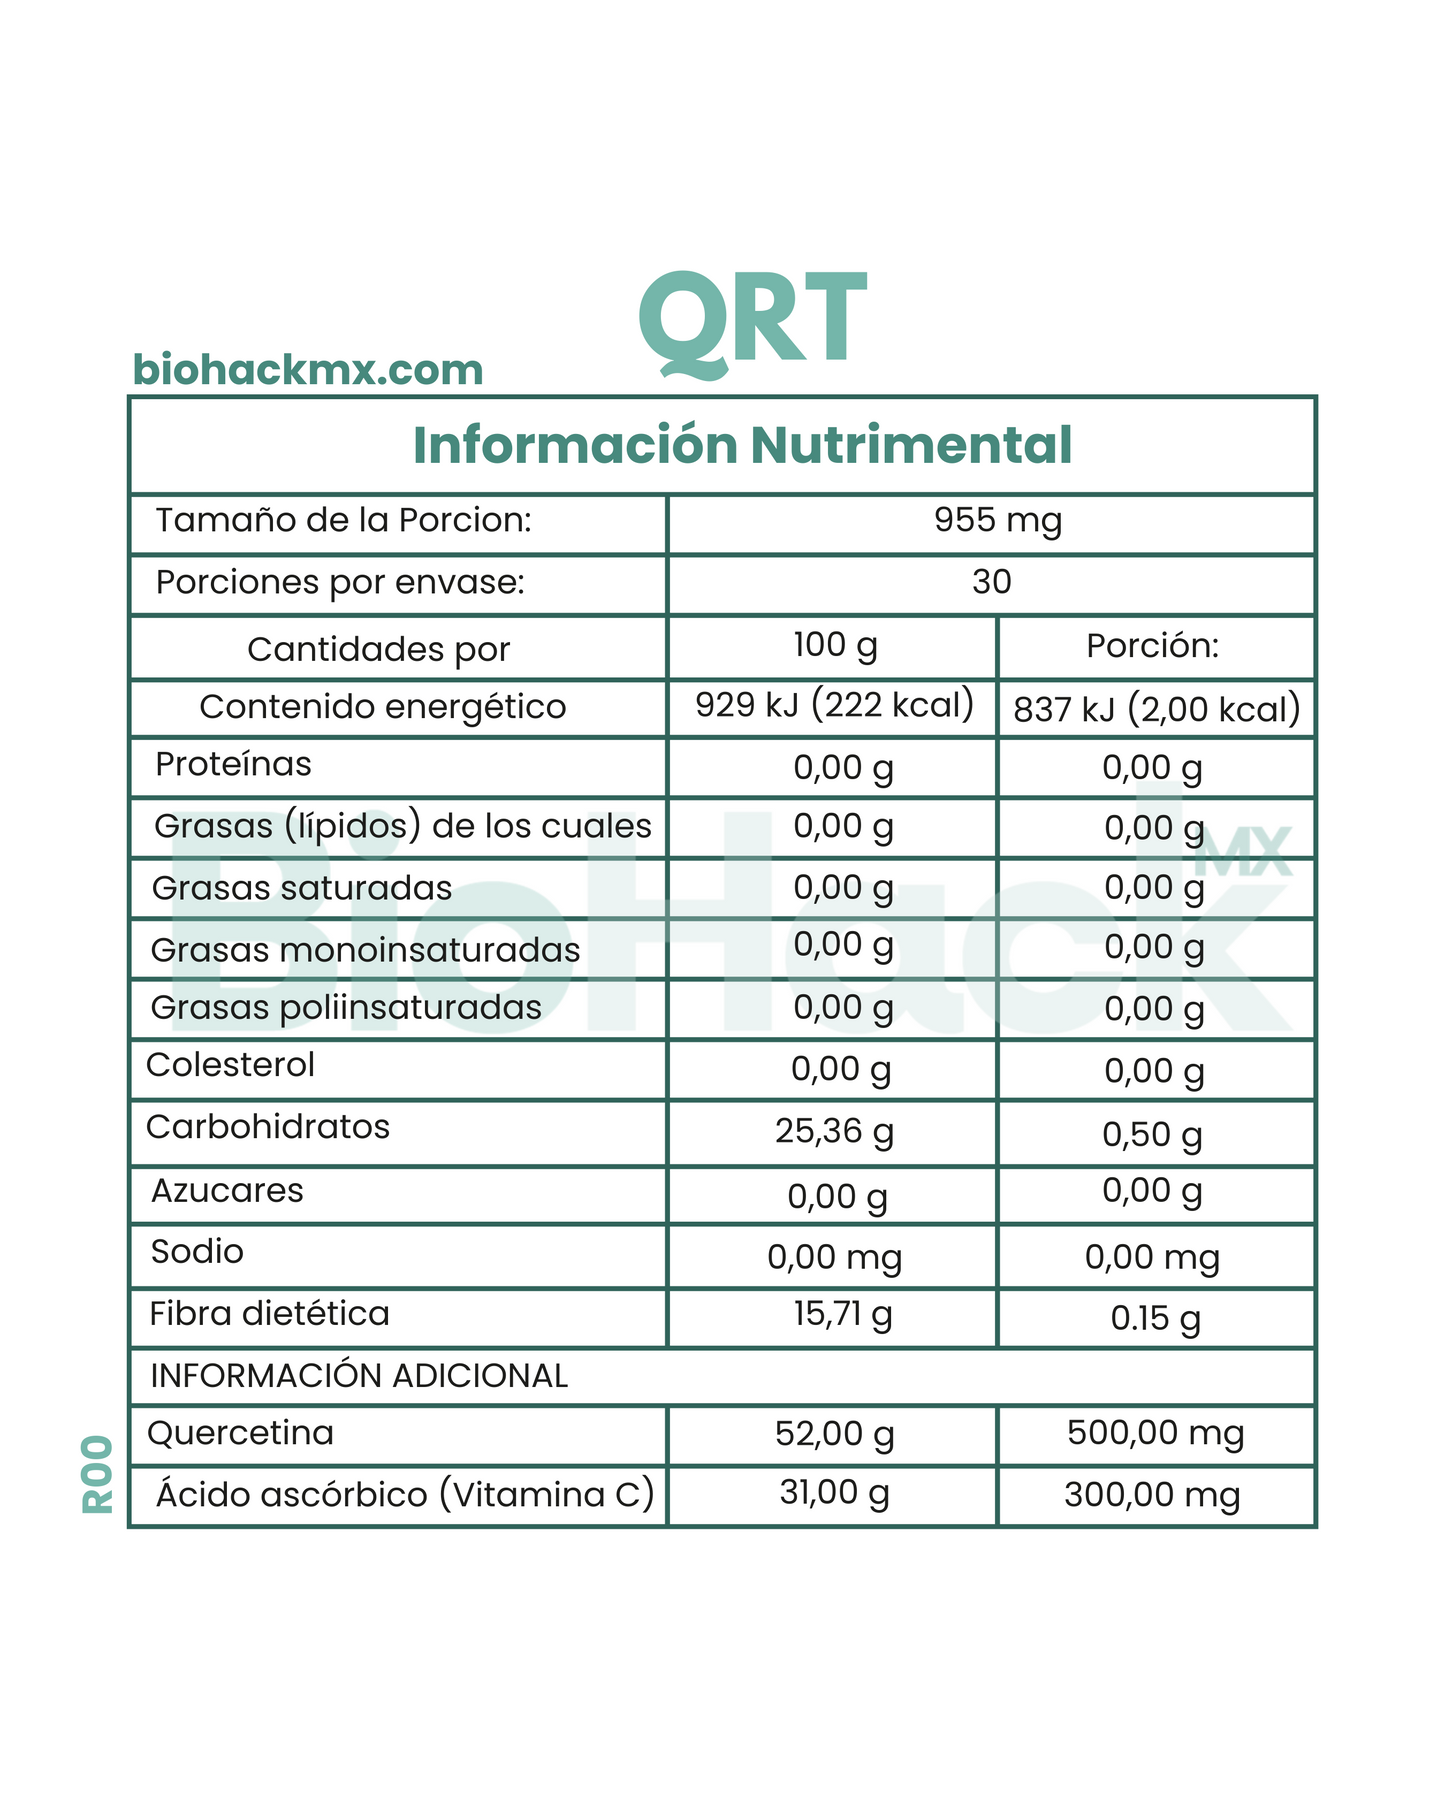 Triada 1 mes - Precursor de NAD + Quercetina + Luteolina